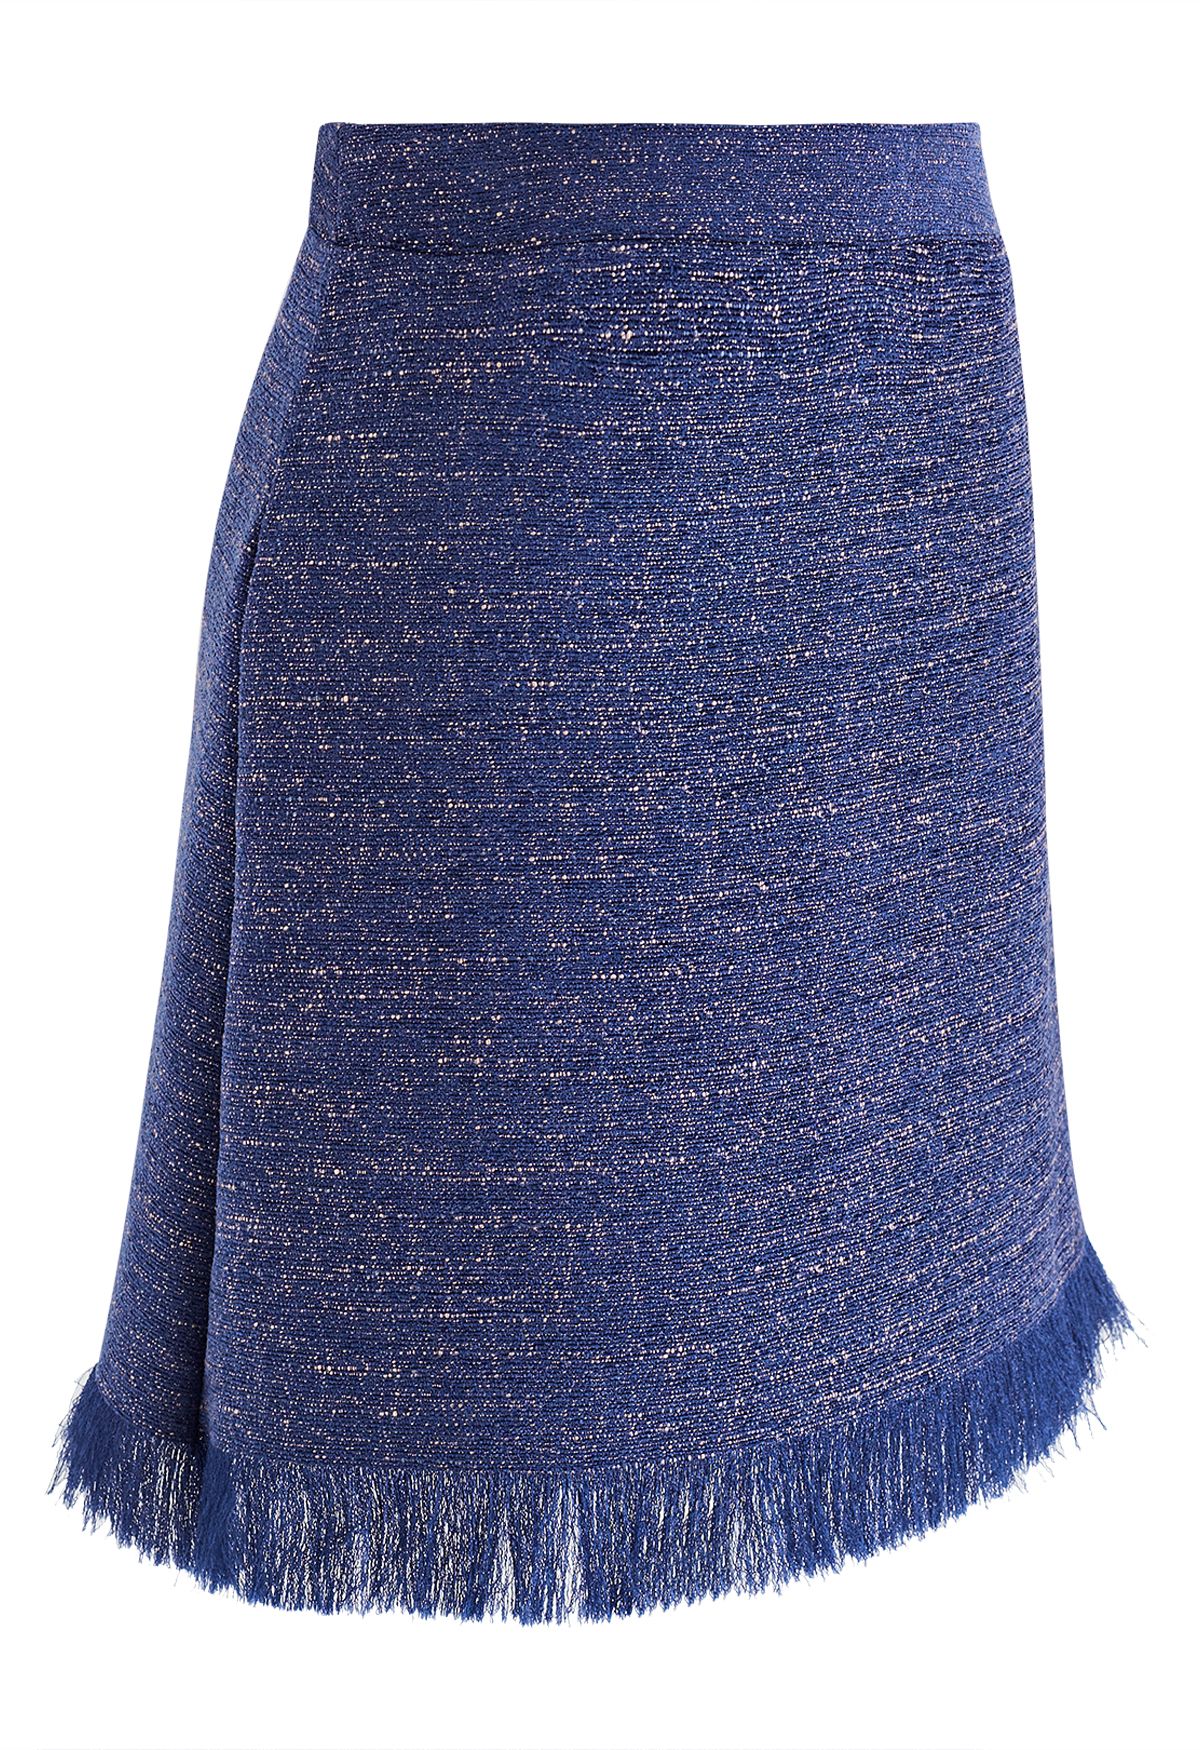 Minifalda azul marino con dobladillo con flecos